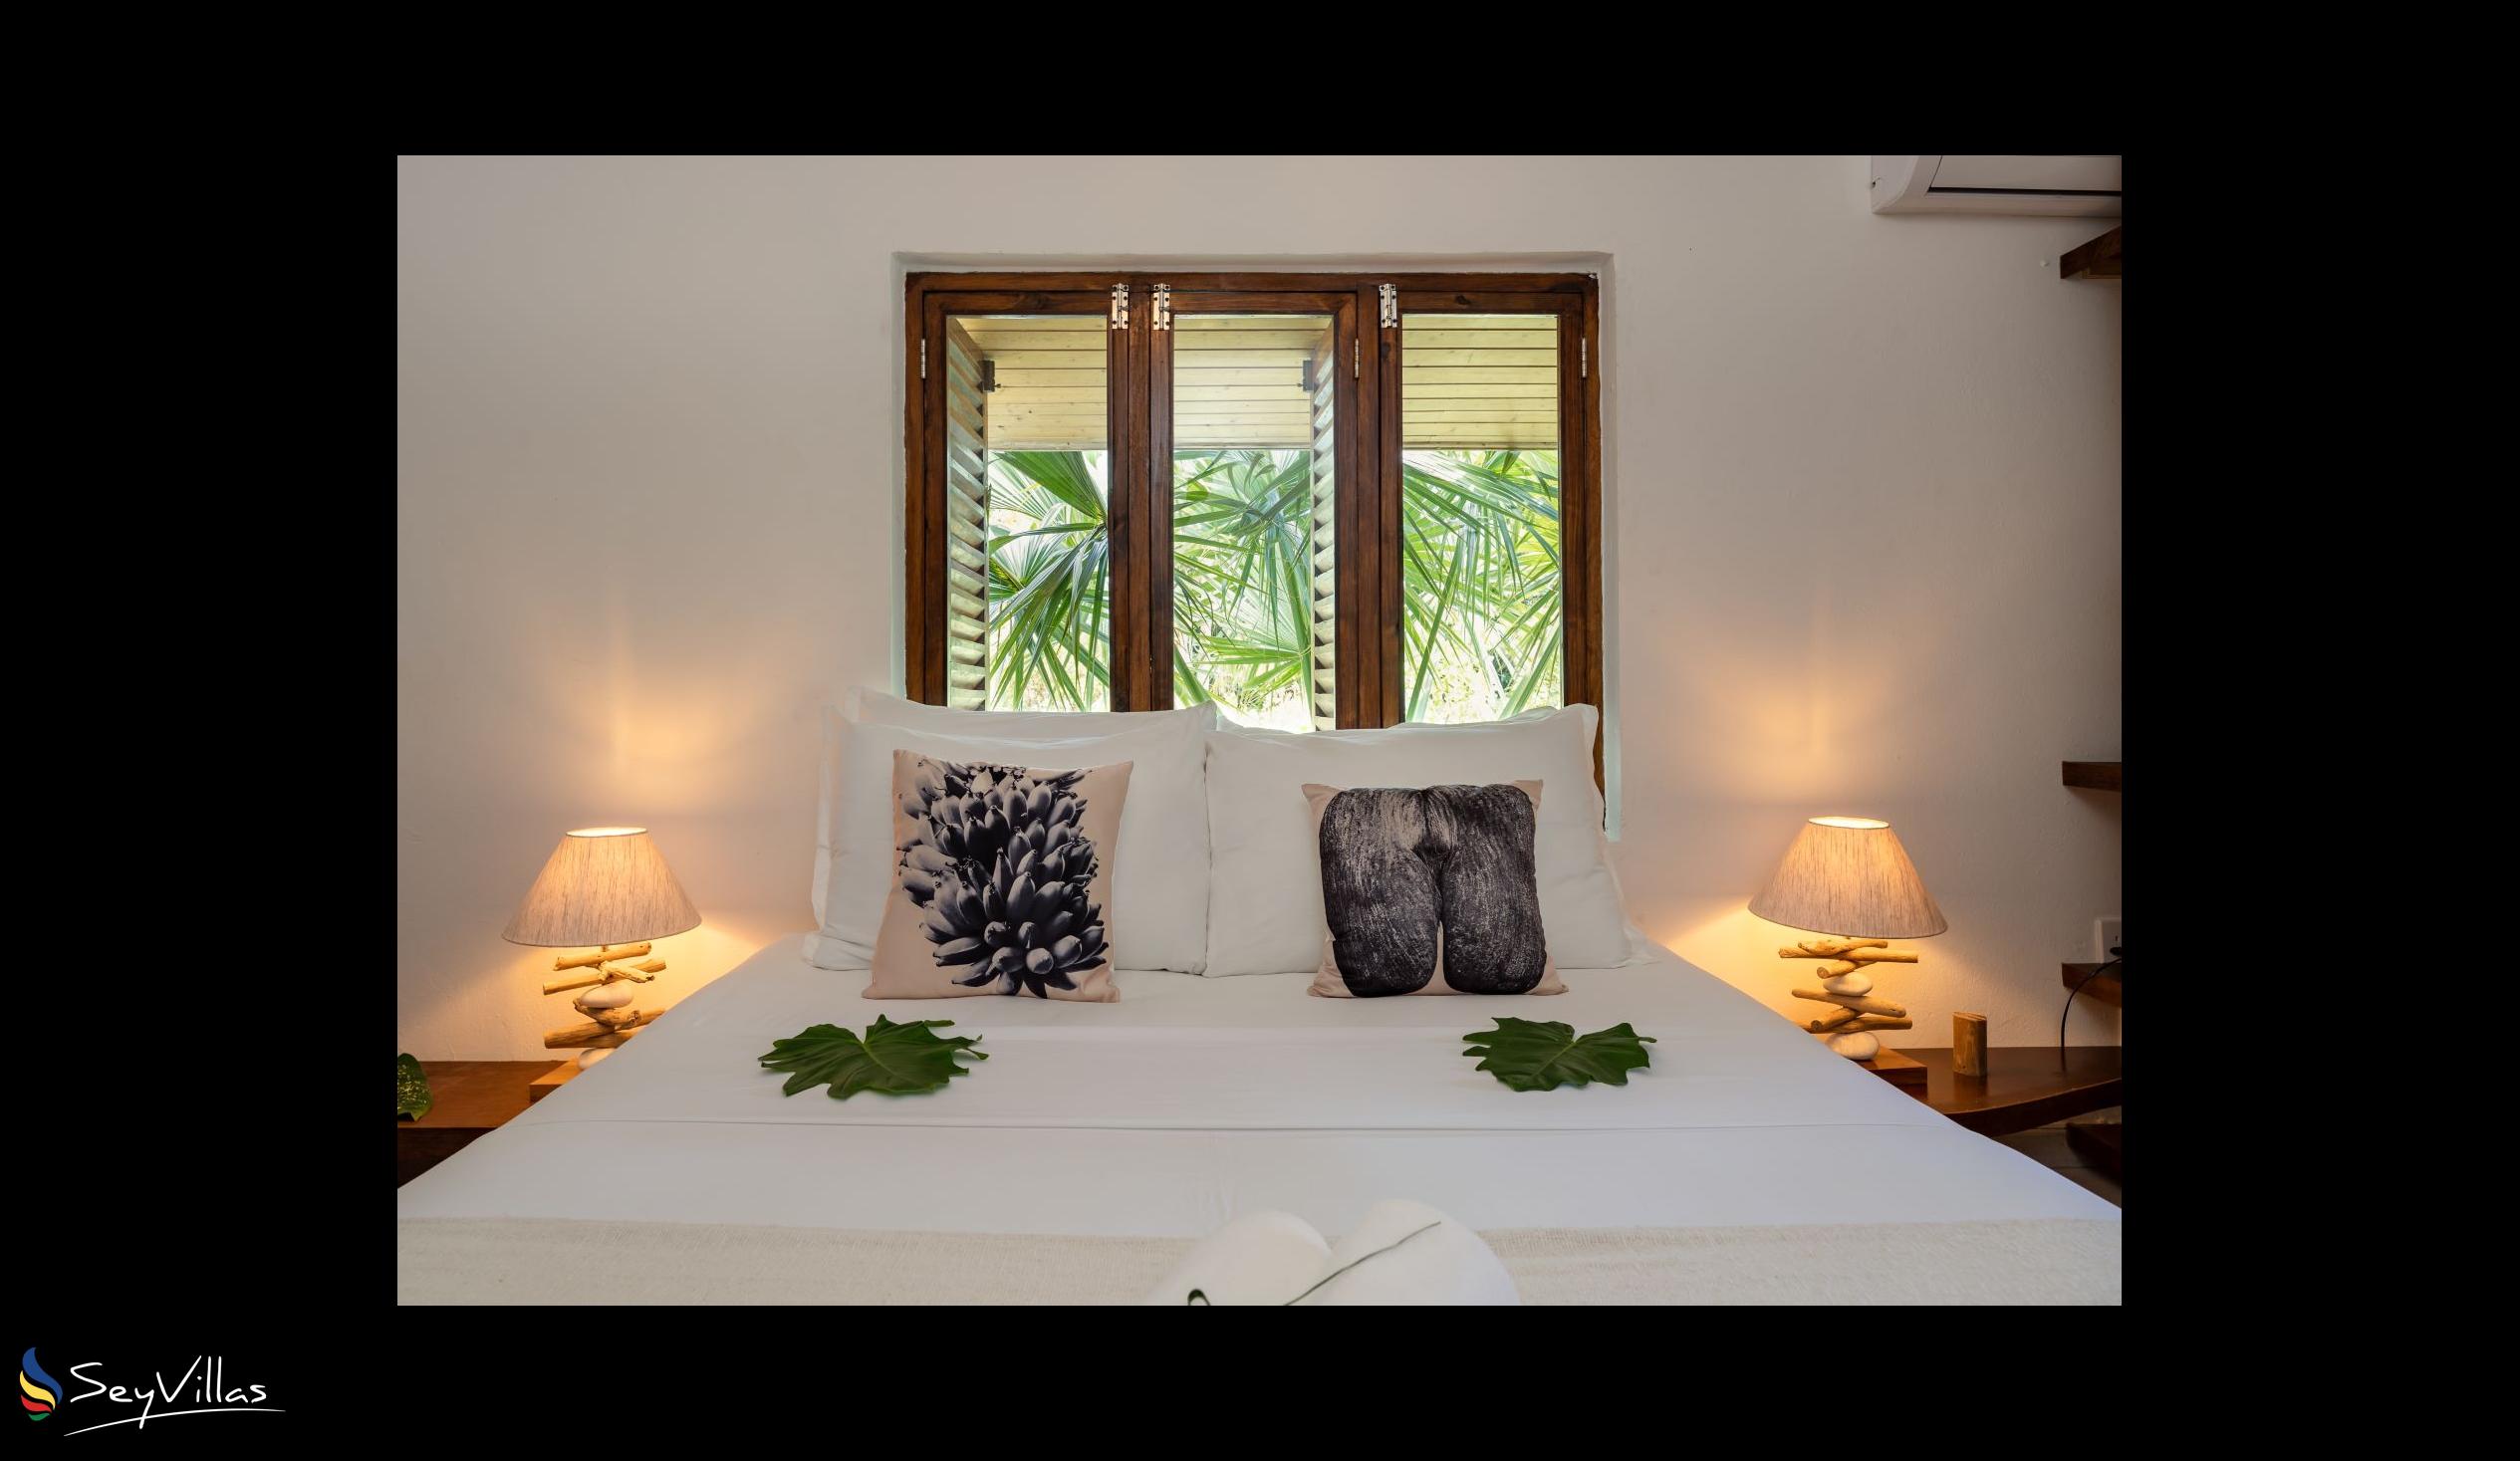 Foto 67: Bliss Hotel Praslin - Eden Garden - Camera Charme - Praslin (Seychelles)